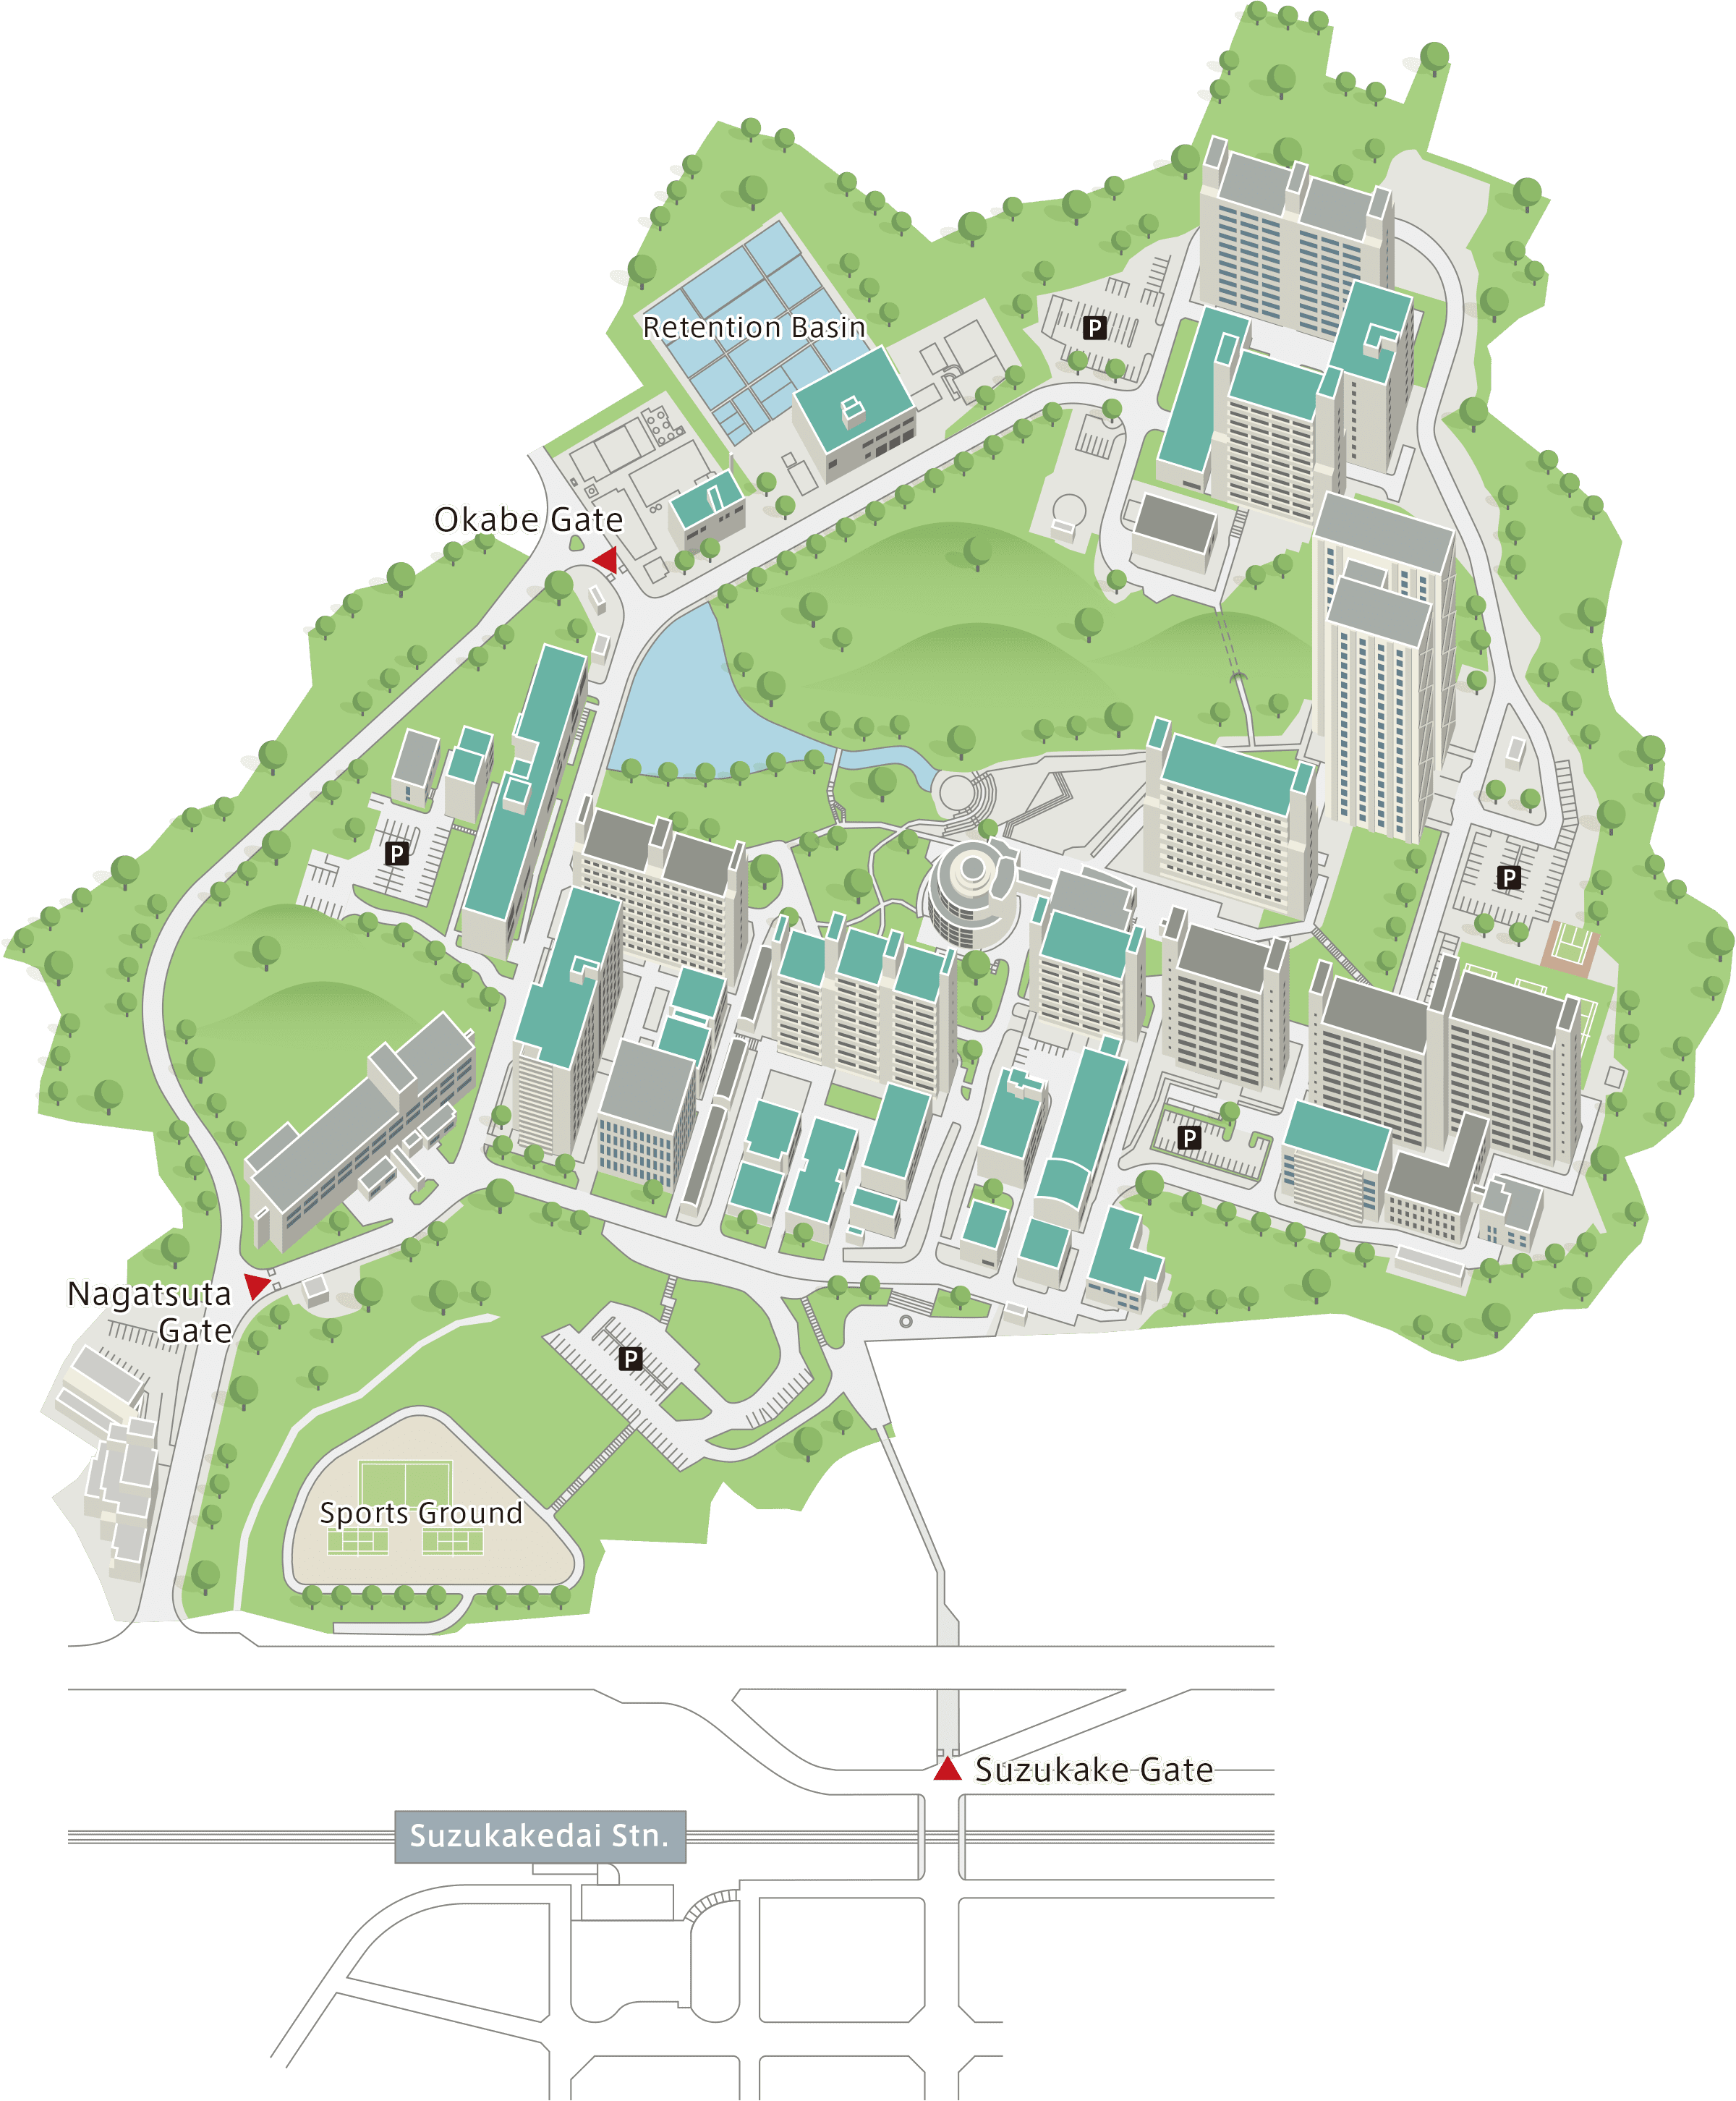 Suzukakedai Campus Map